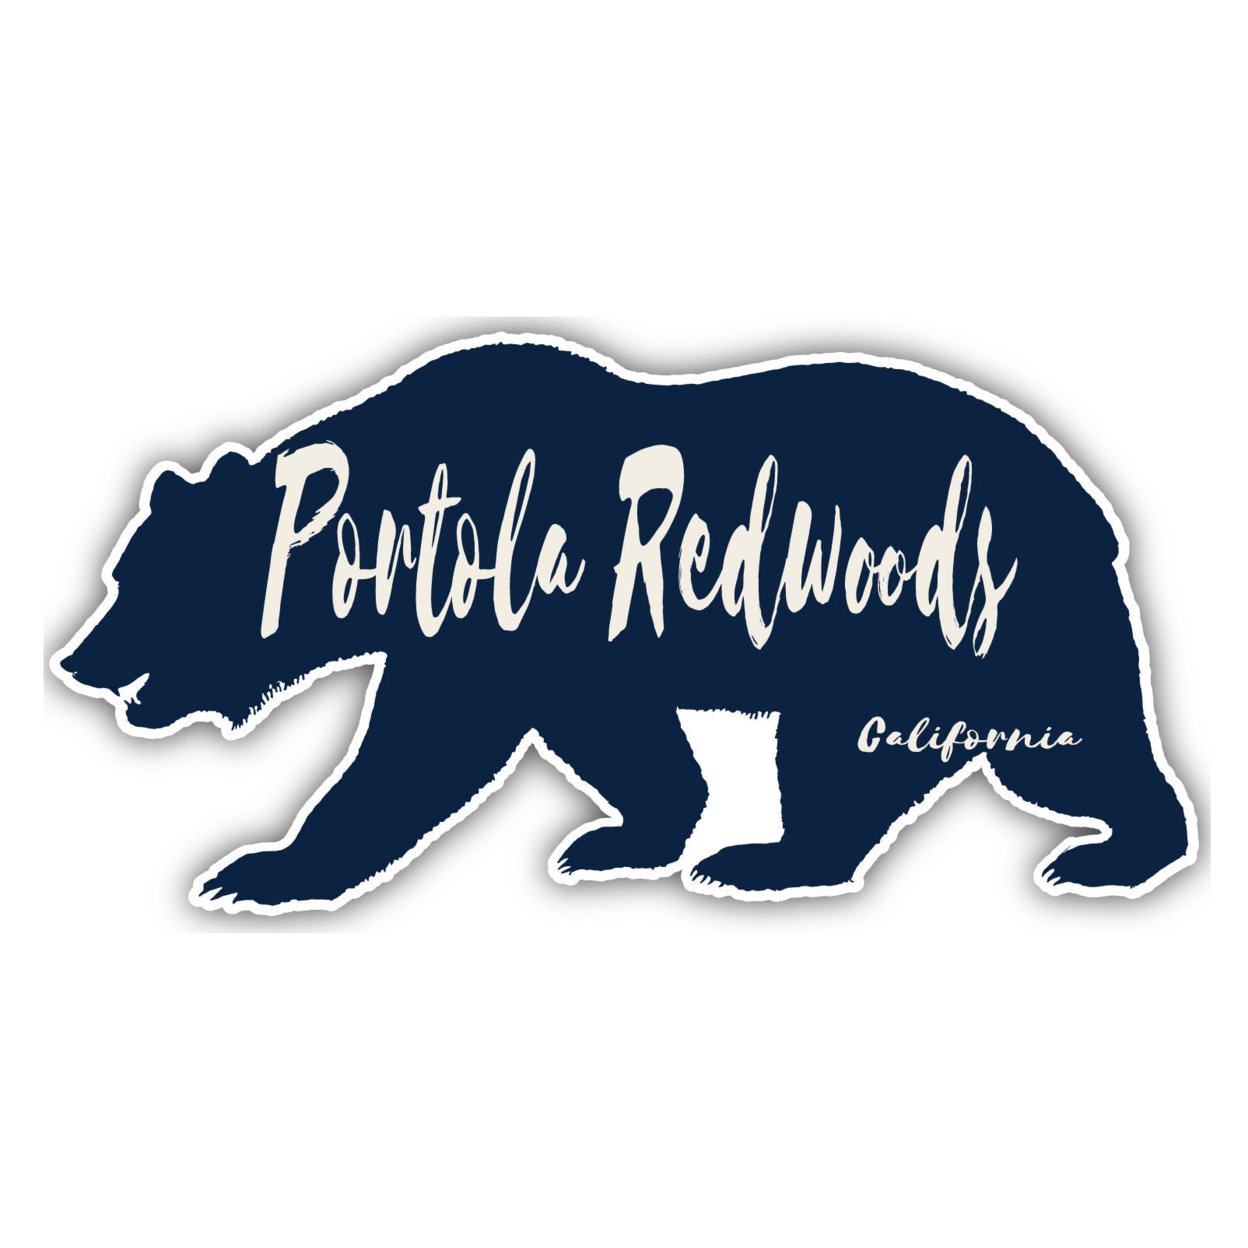 Portola Redwoods California Souvenir Decorative Stickers (Choose Theme And Size) - Single Unit, 2-Inch, Tent